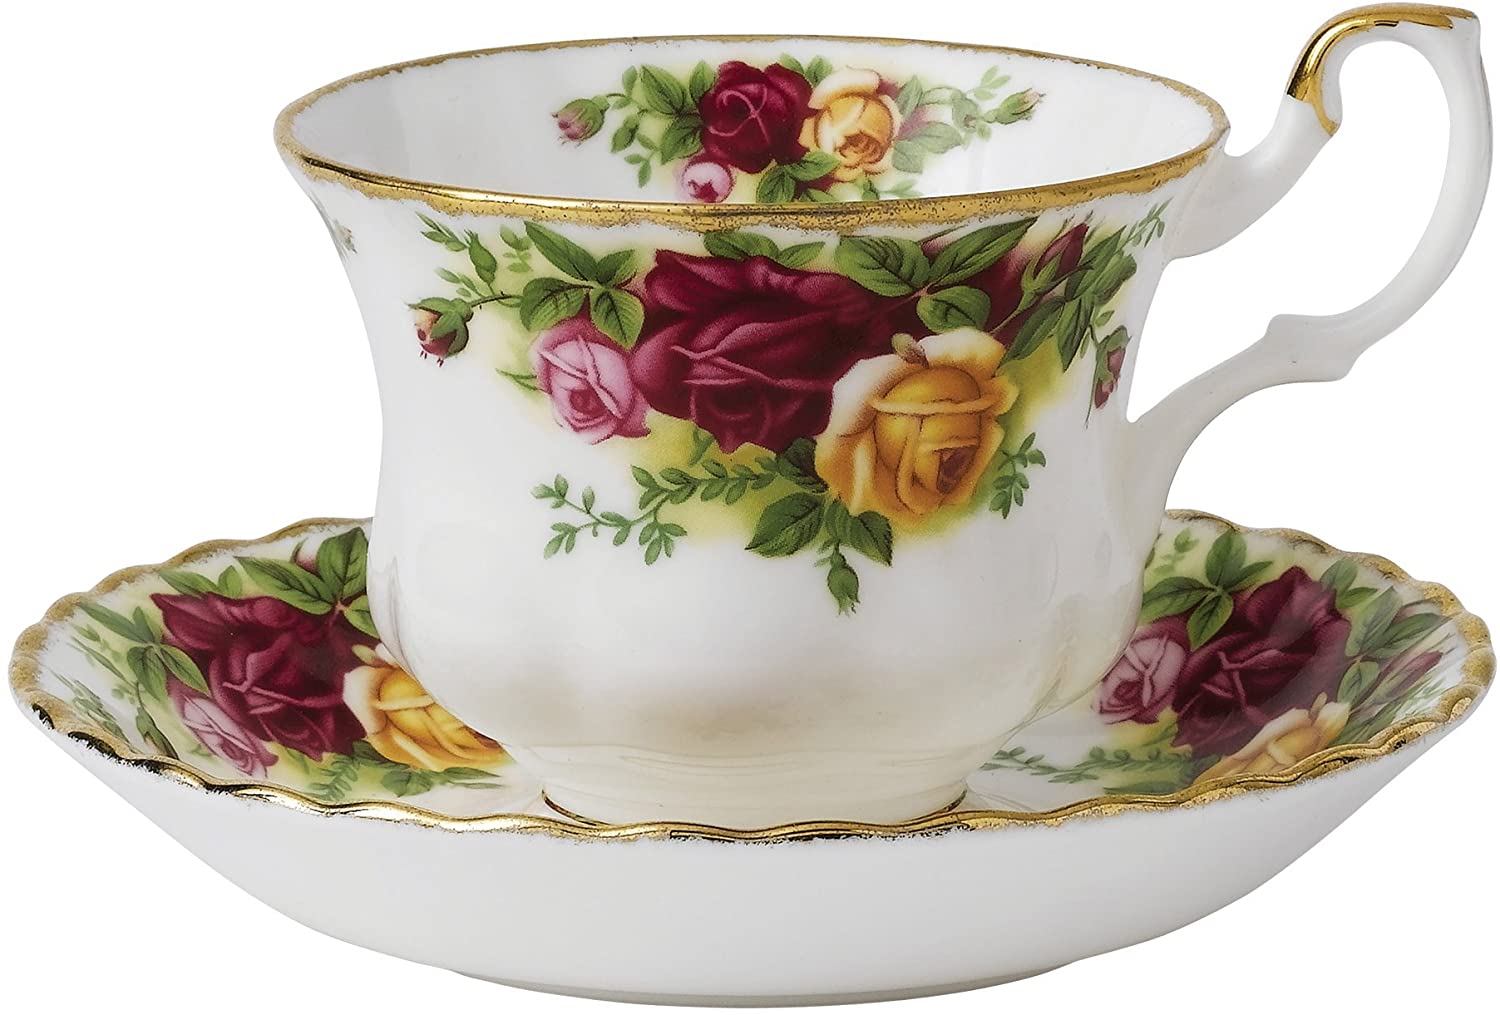 Royal Albert Old Country Roses Teacup & Saucer Set